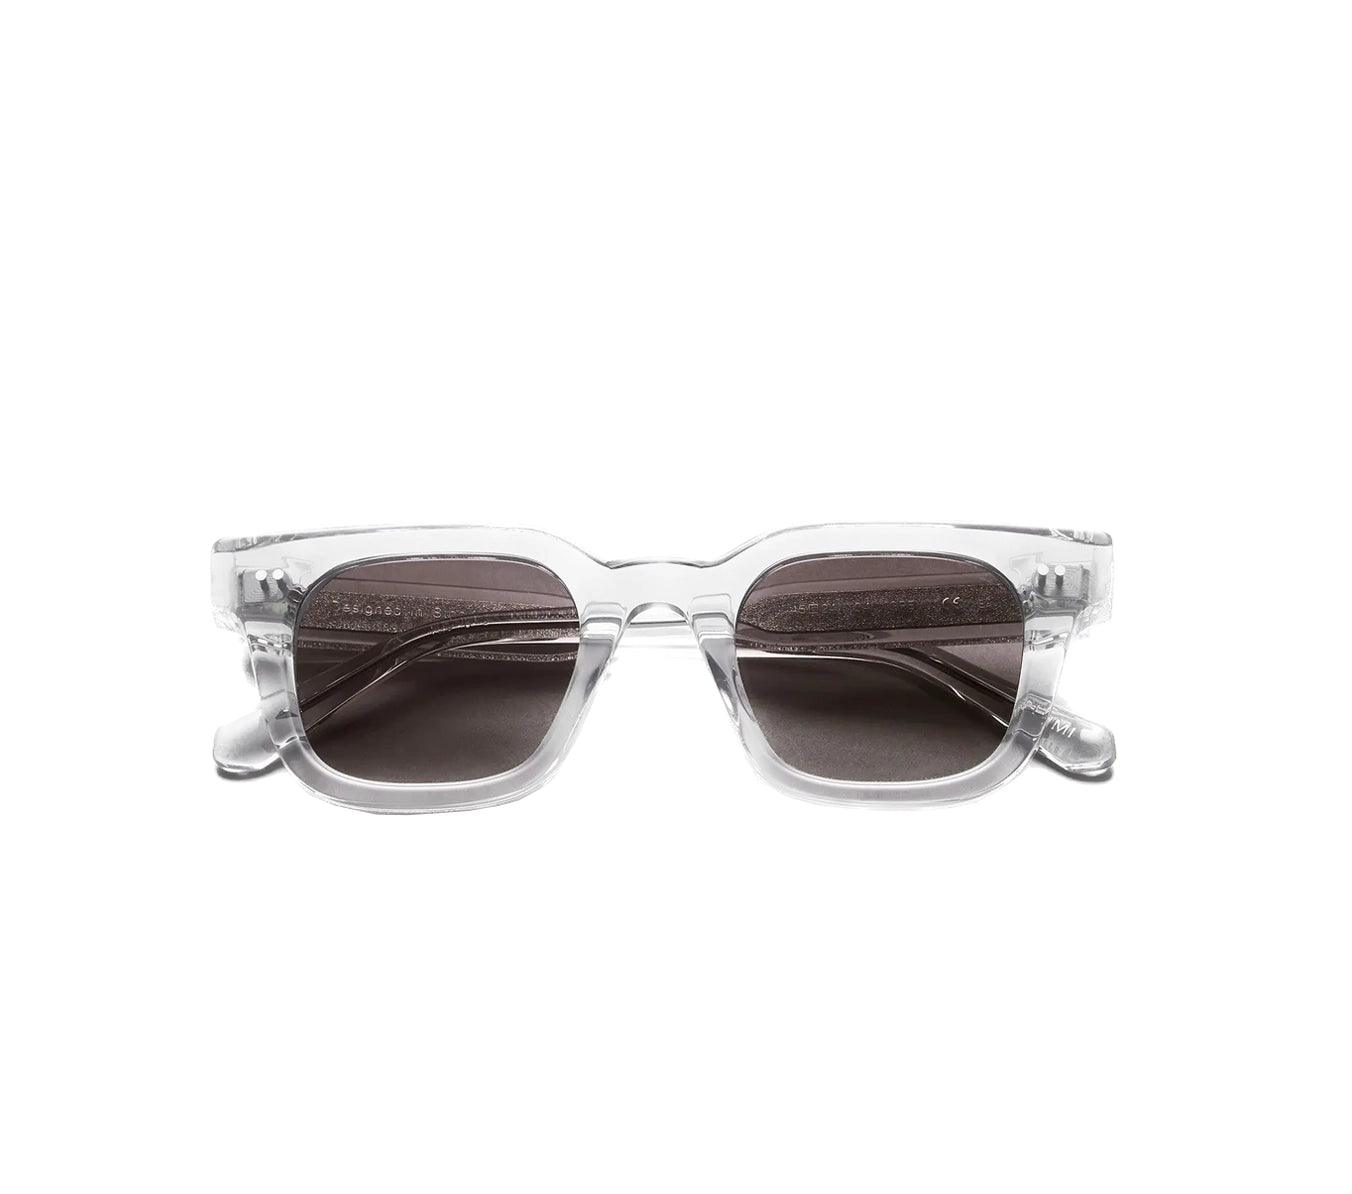 CHIMI 04 - Grey - One size - Sunglasses